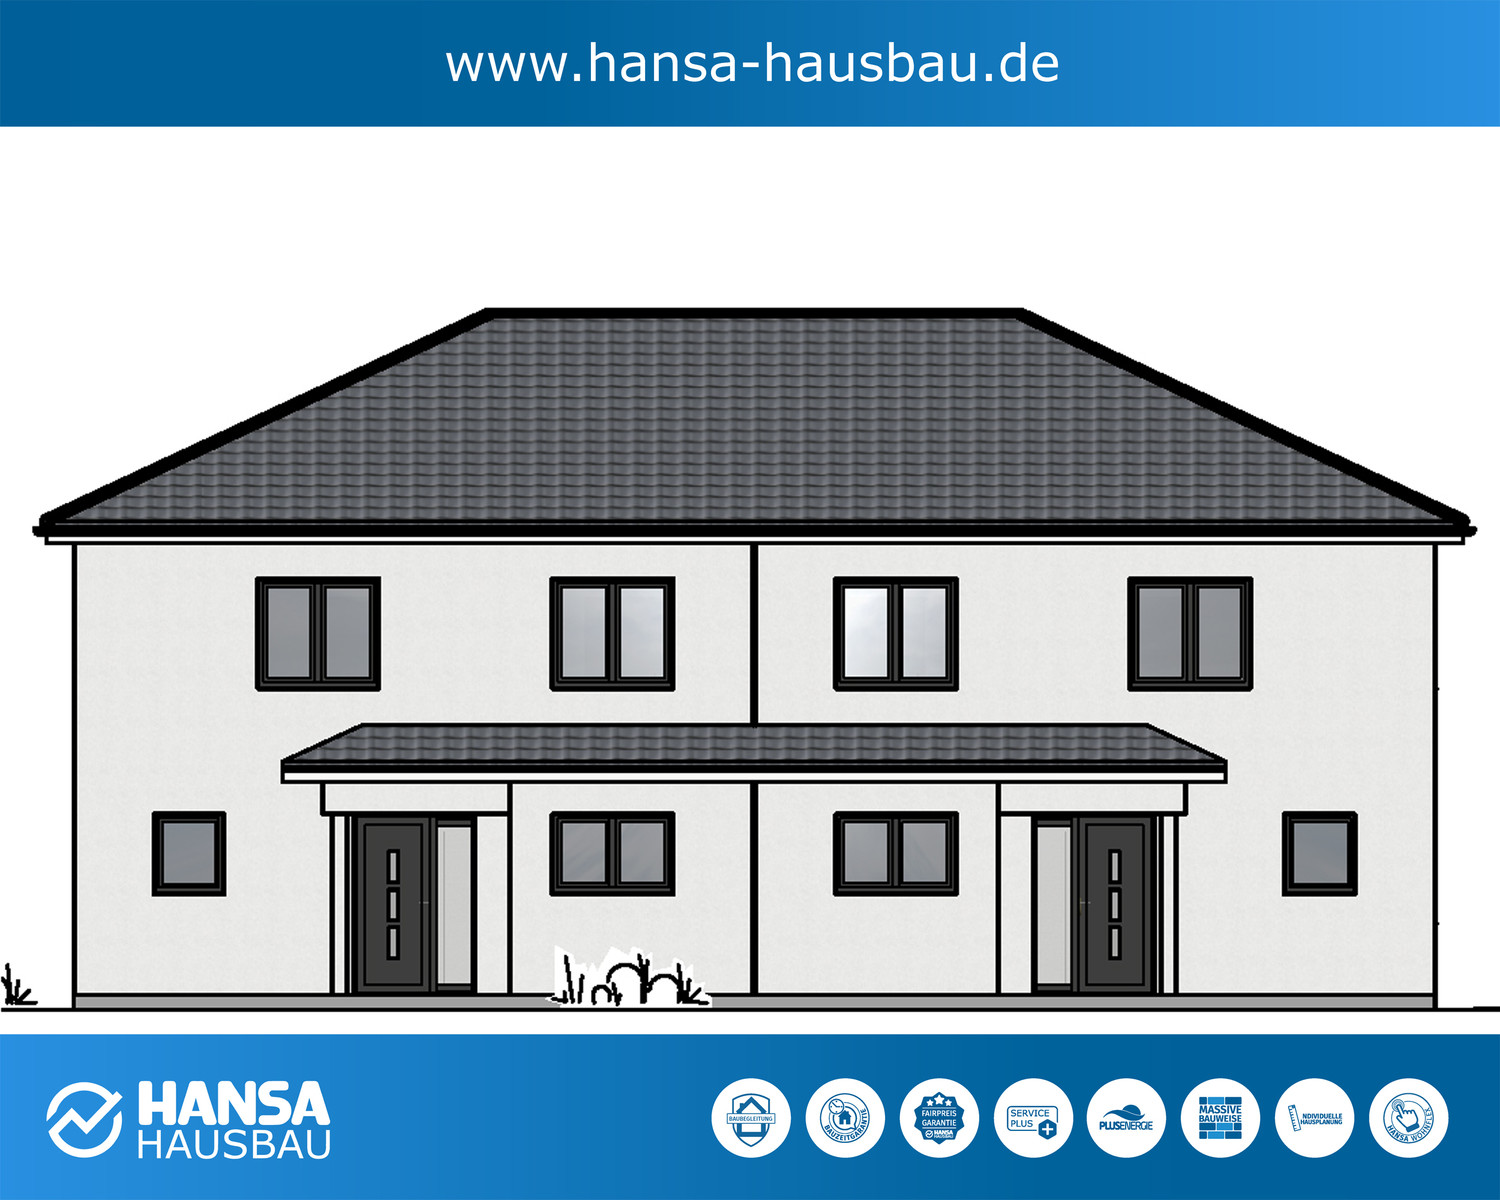 Hansa Hausbau Bauplanung Architektenhaus Doppelhaus